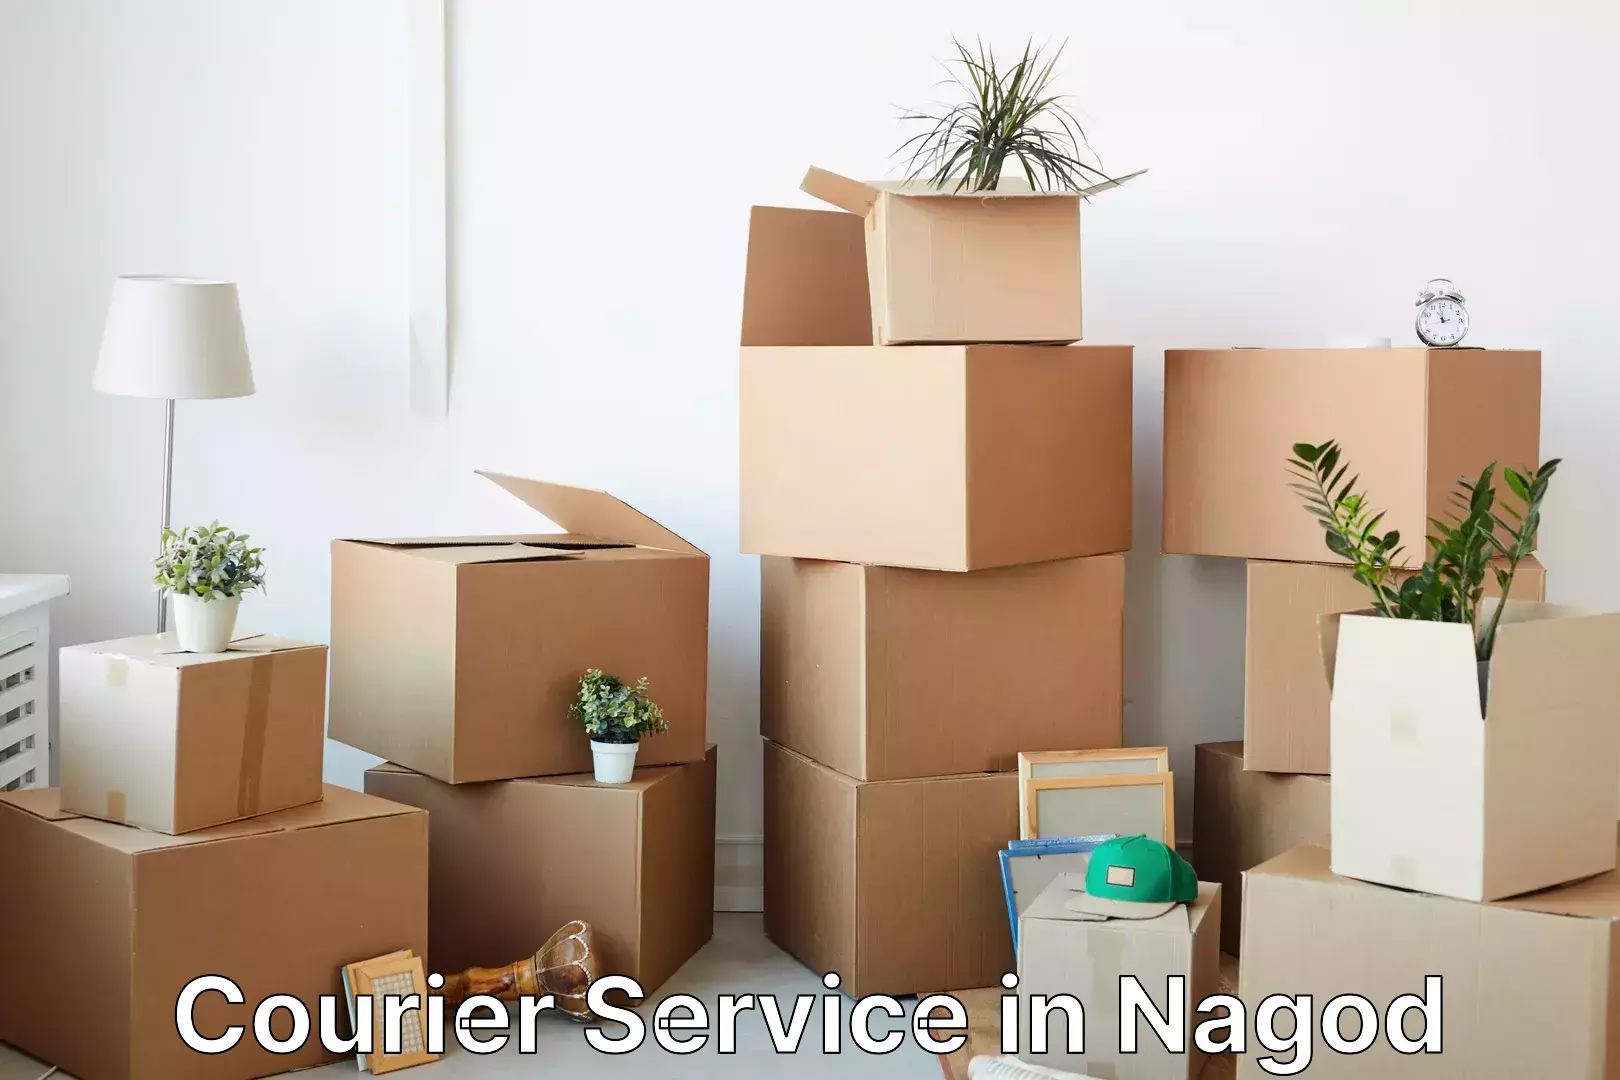 Effective logistics strategies in Nagod